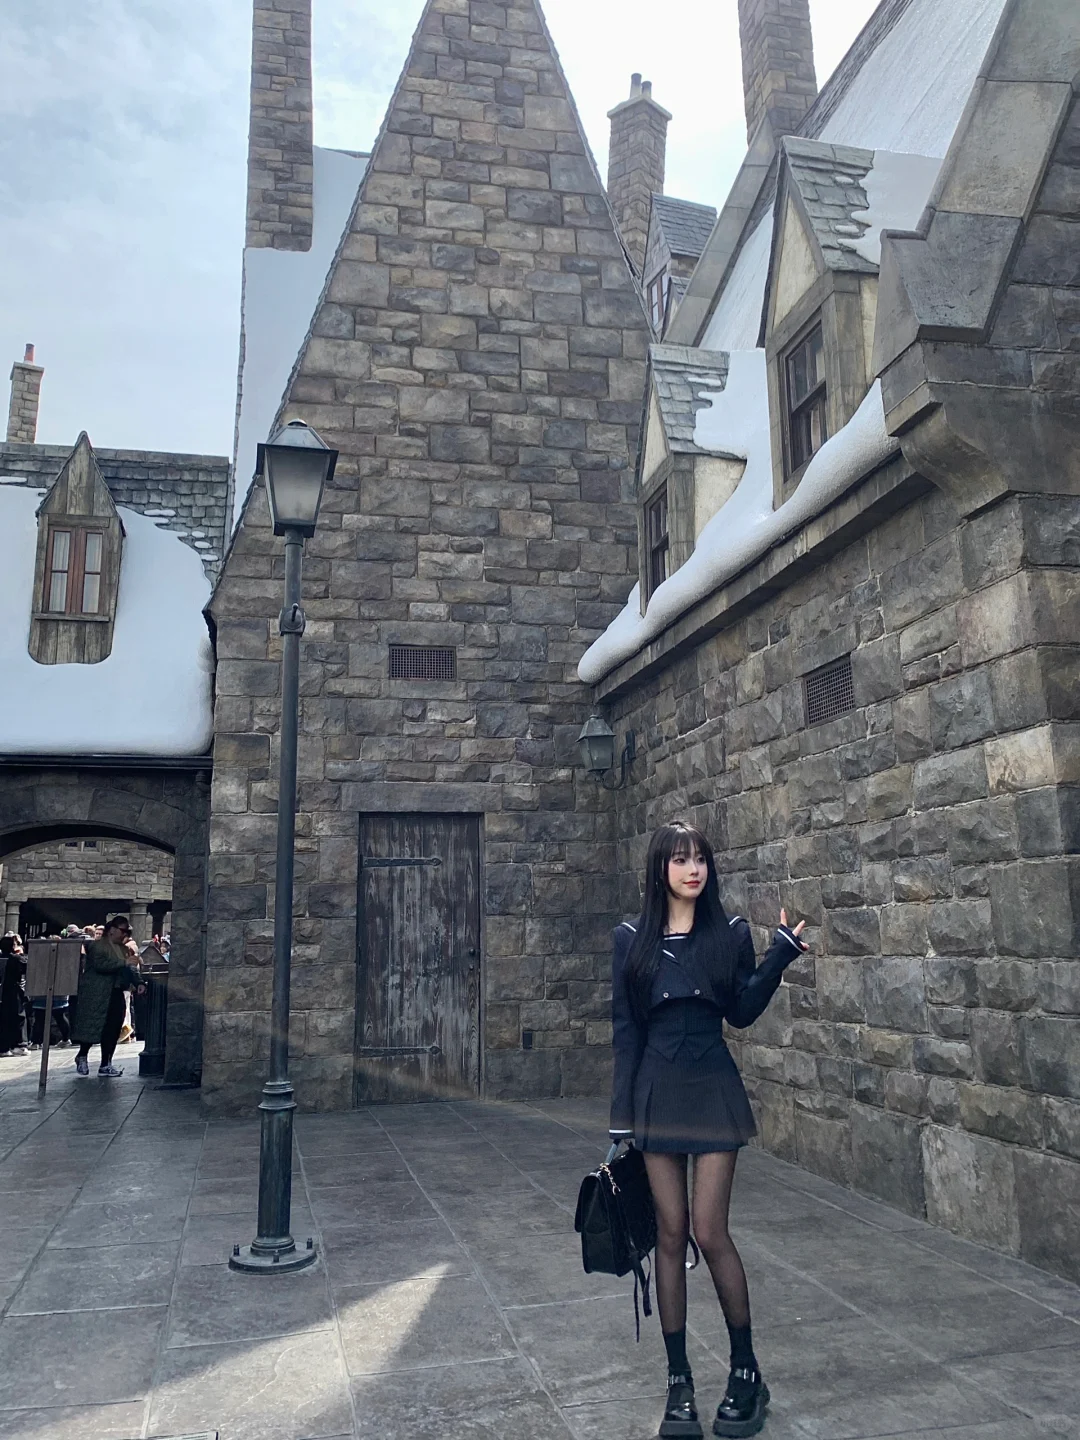 Osaka-Universal Studios Japan Osaka, recommend Harry Potter and the Forbidden Journey